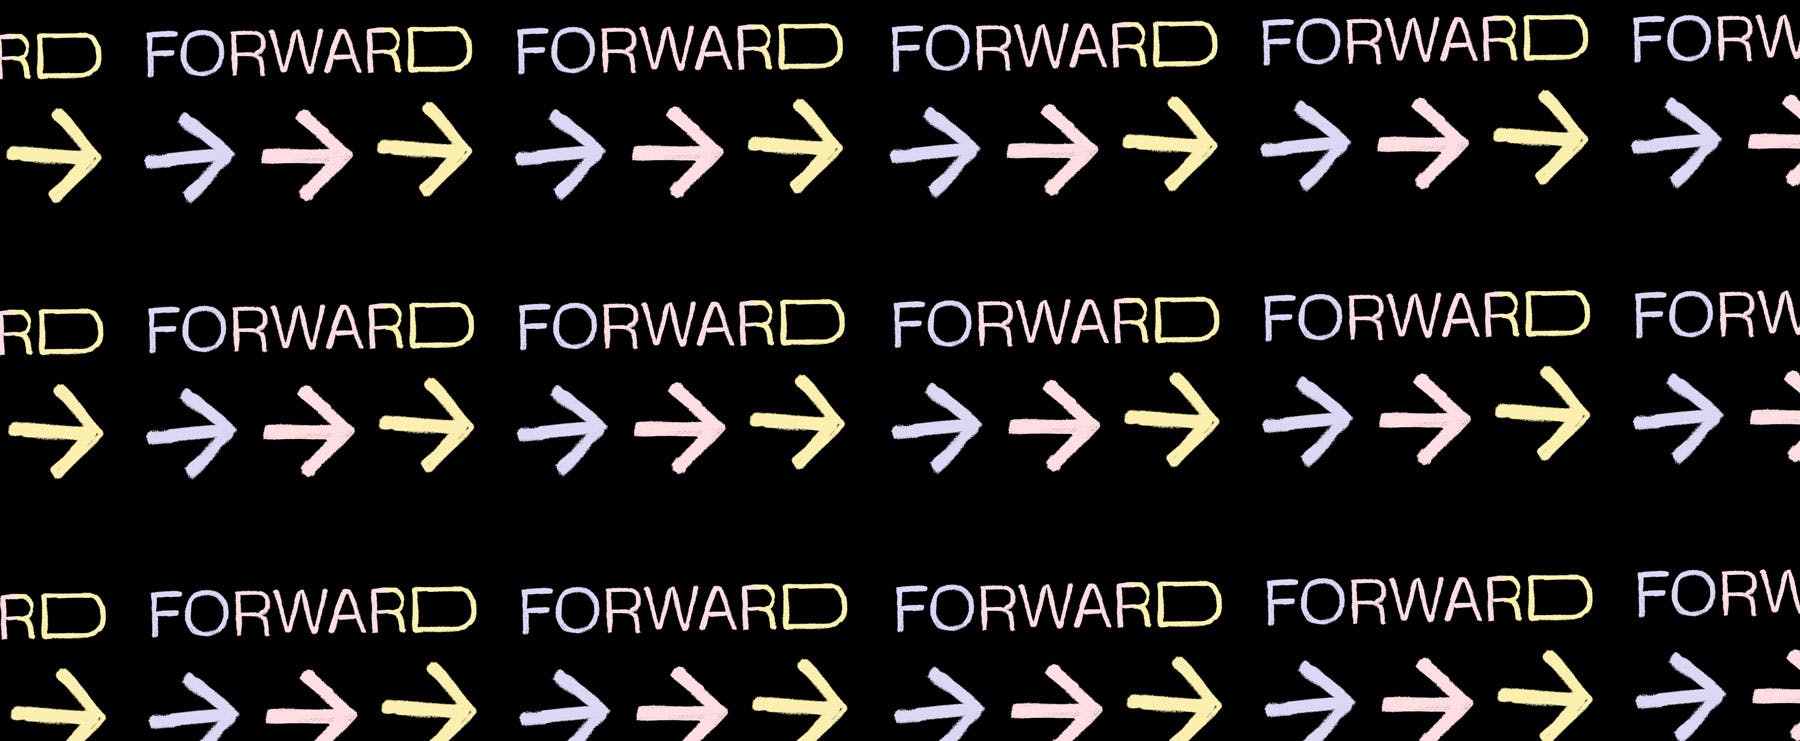 Forward, a digital event from Pleo